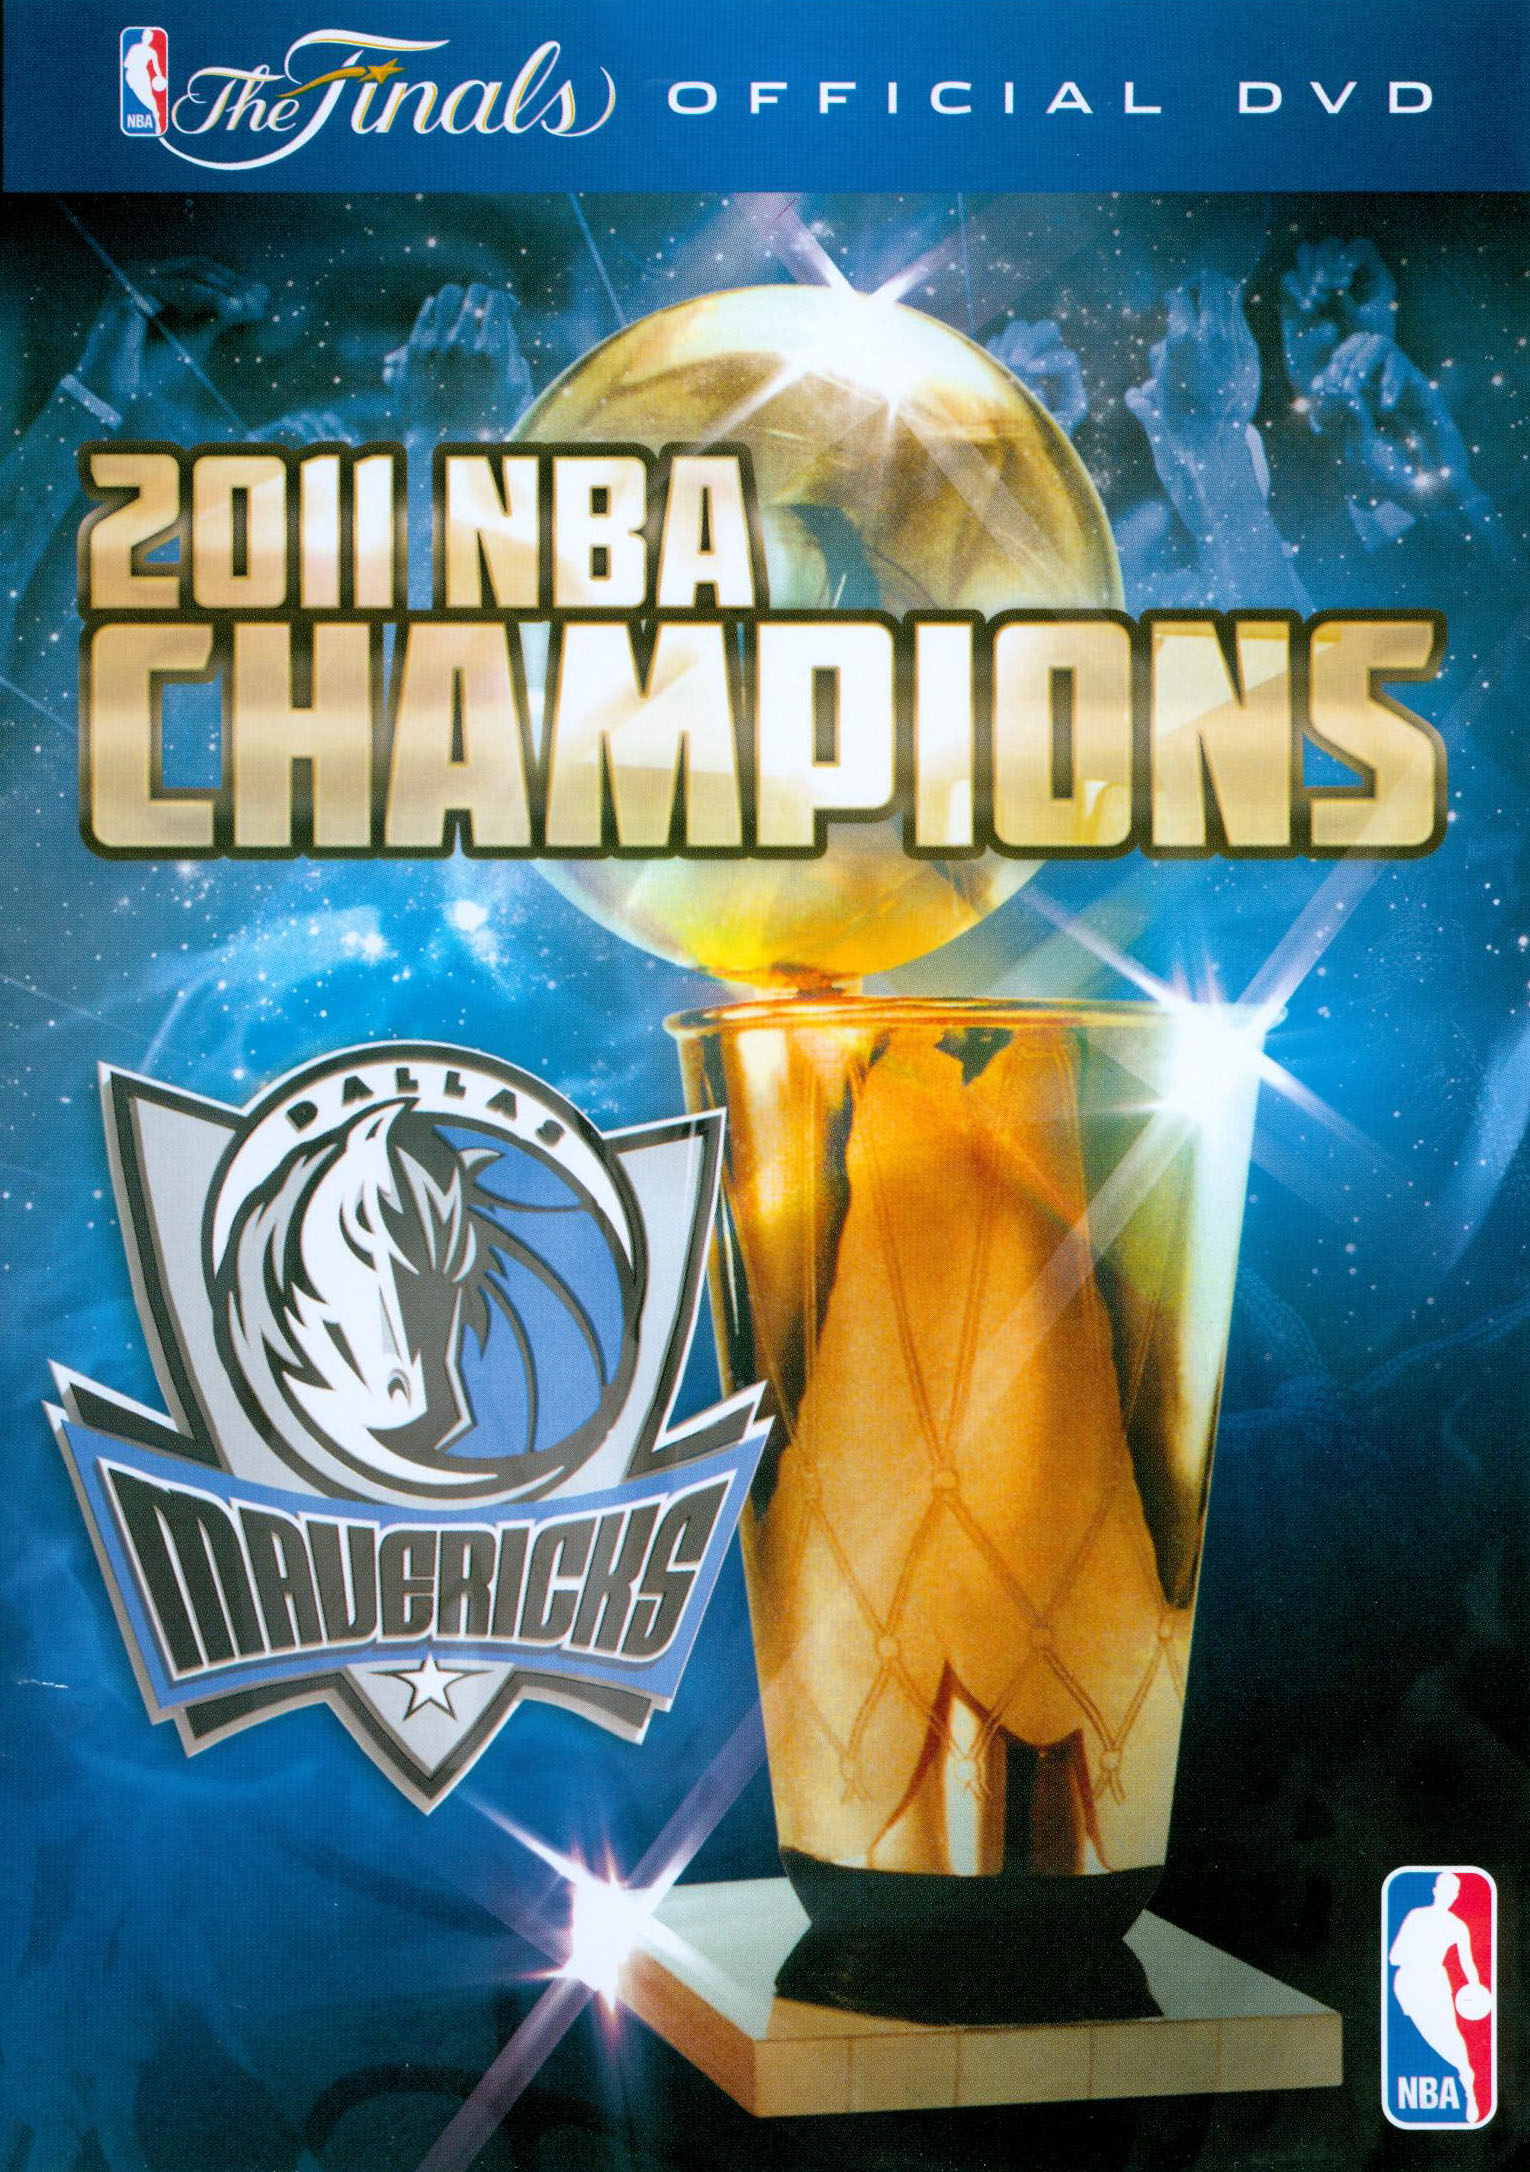 Dallas Mavericks 2011 NBA Champions Banner/Flag 18.5 x 11.5